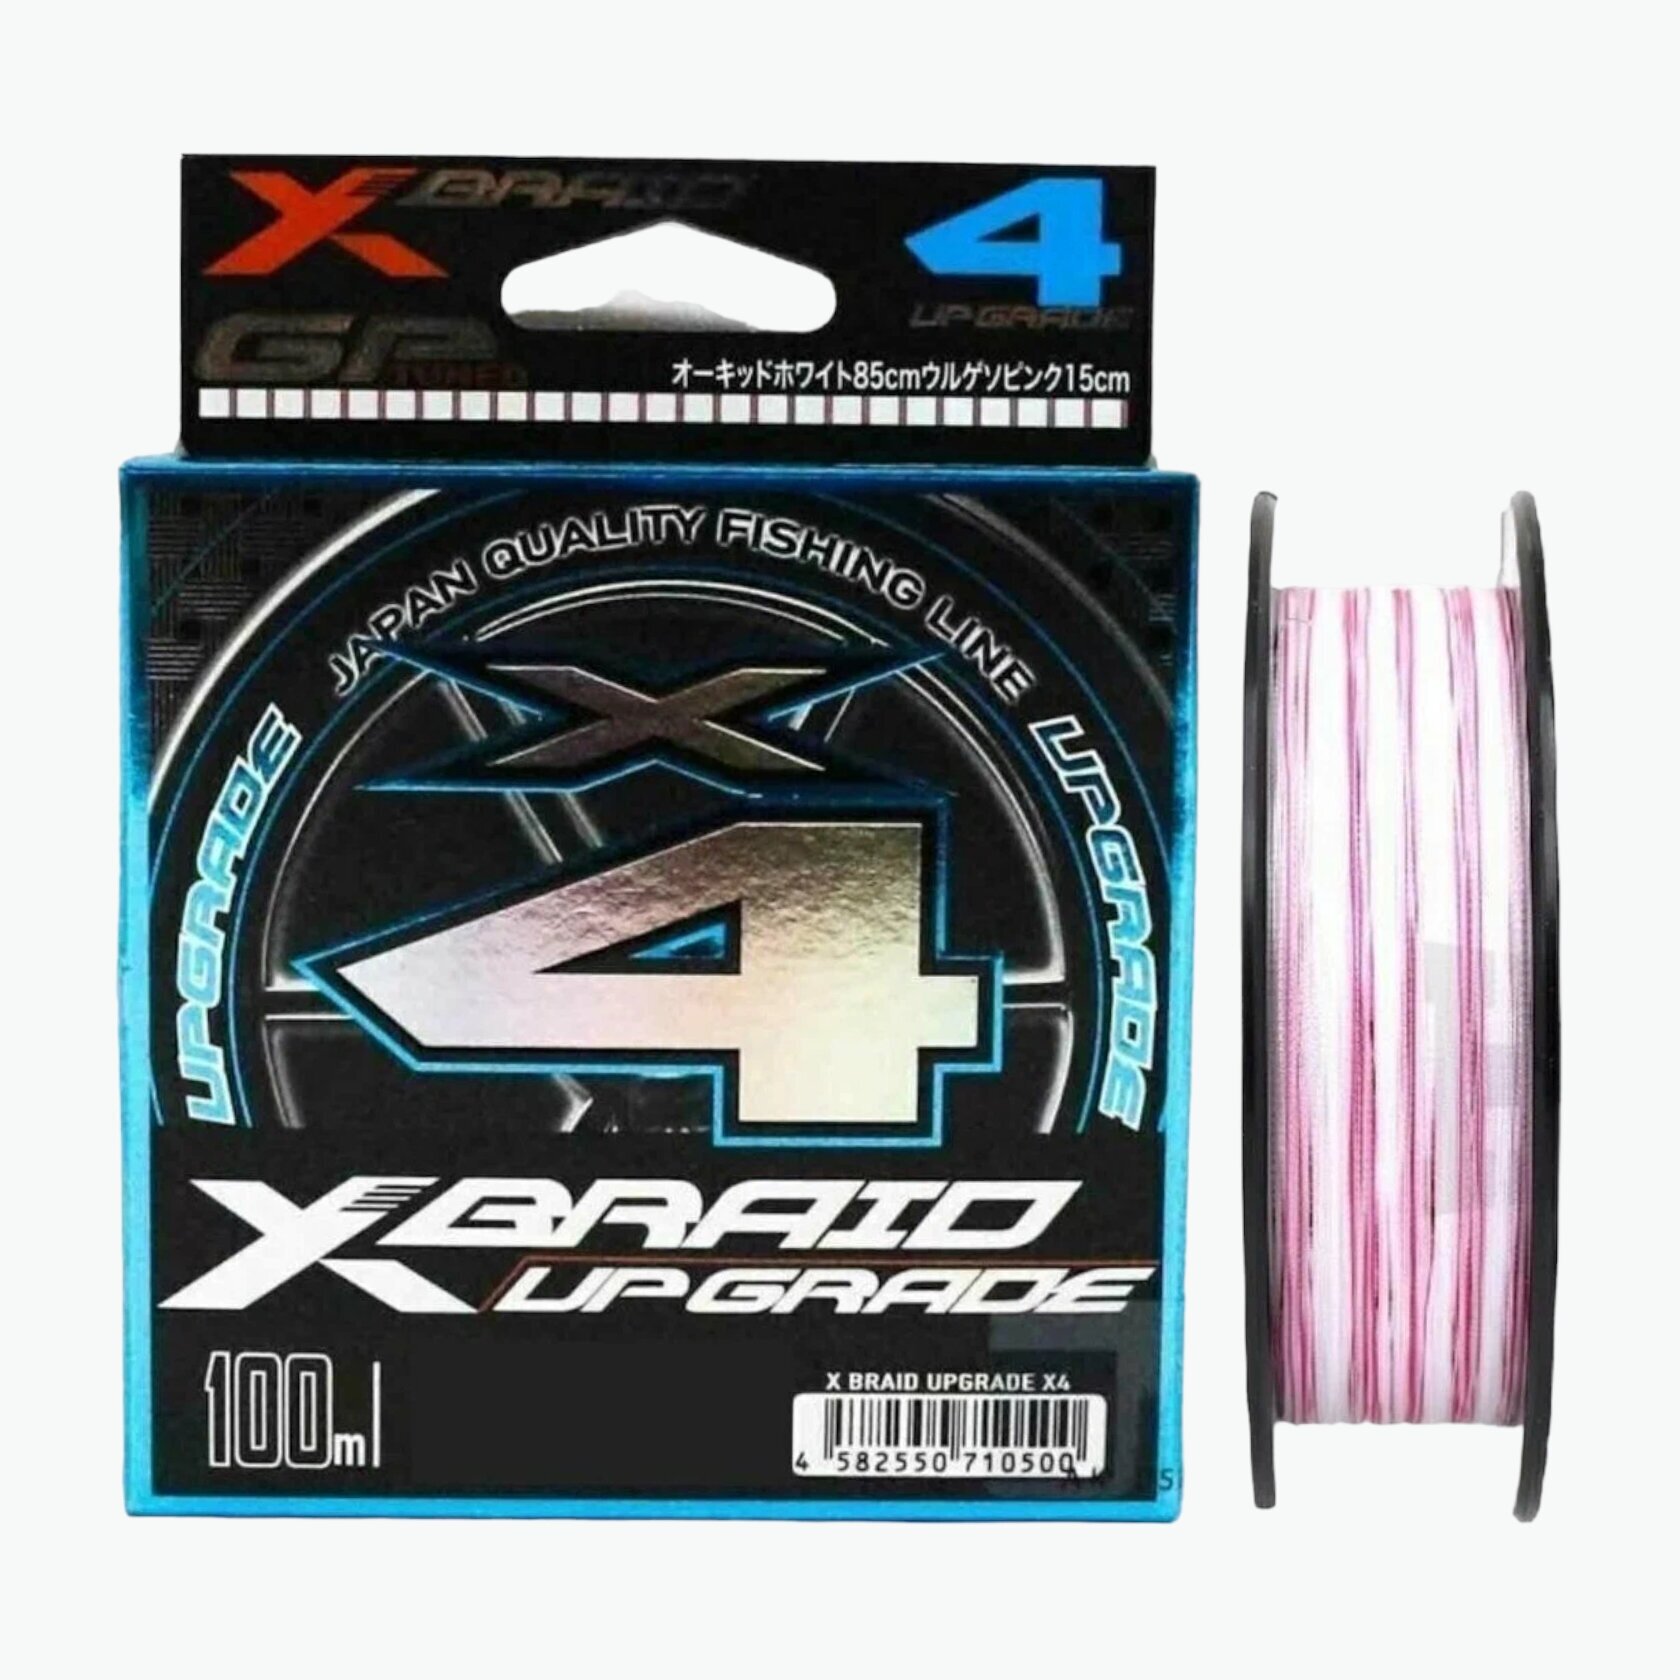 Плетеный шнур для рыбалки YGK X-BRAID UPGRADE X4 150m, 8.17 кг - Розовый/белый